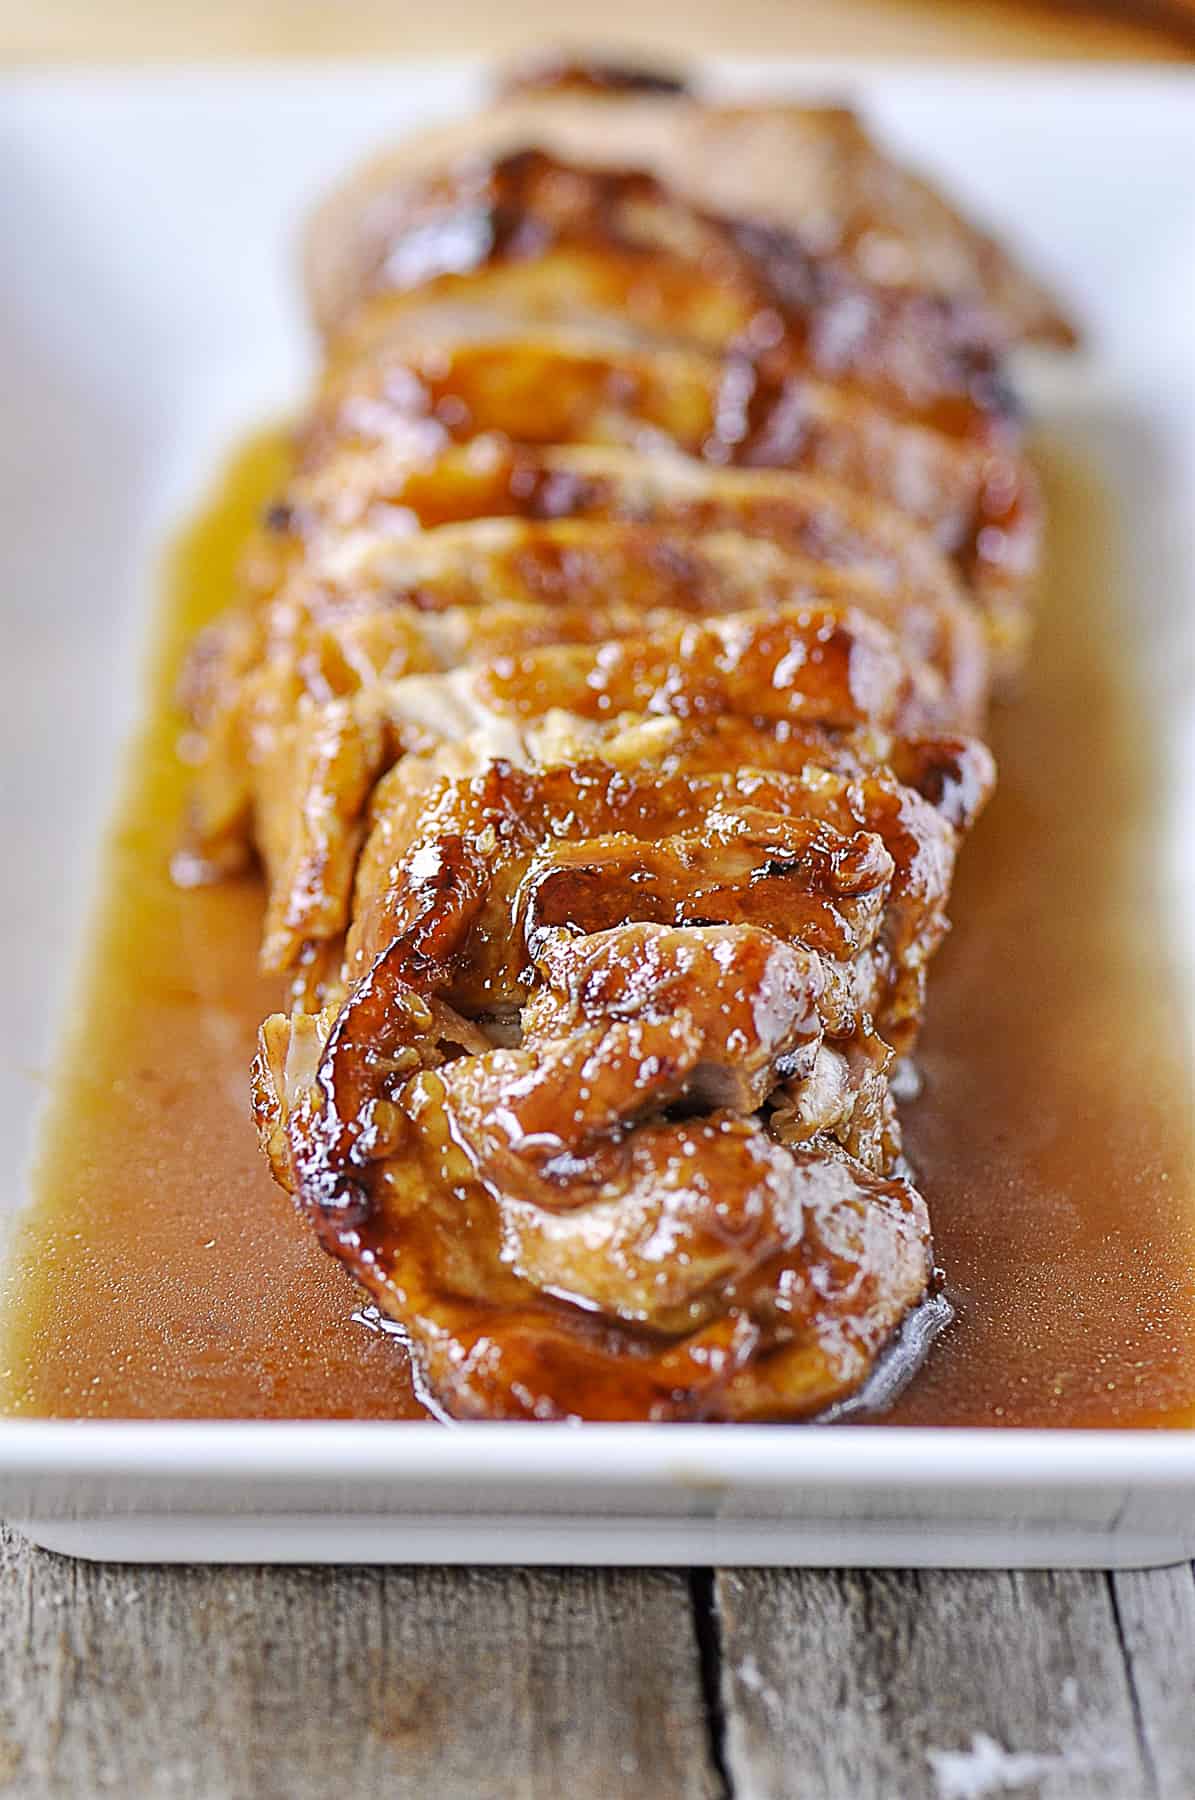 Maple glazed pork tenderloin on a plate